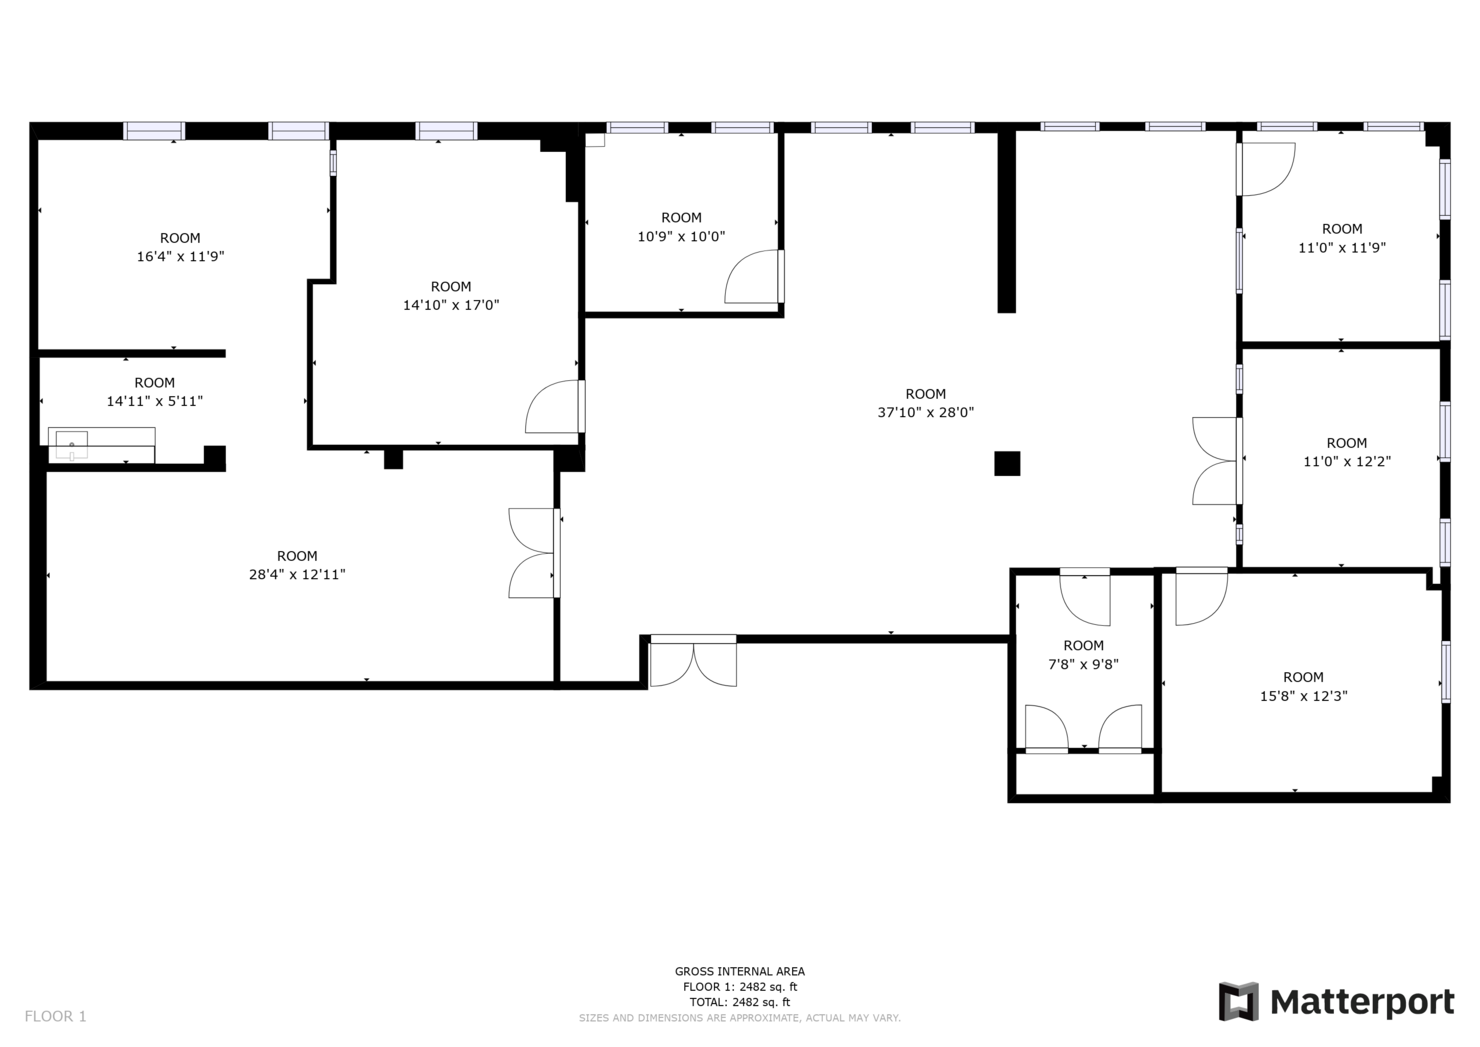 483 Tenth Avenue Office Space - Floorplan